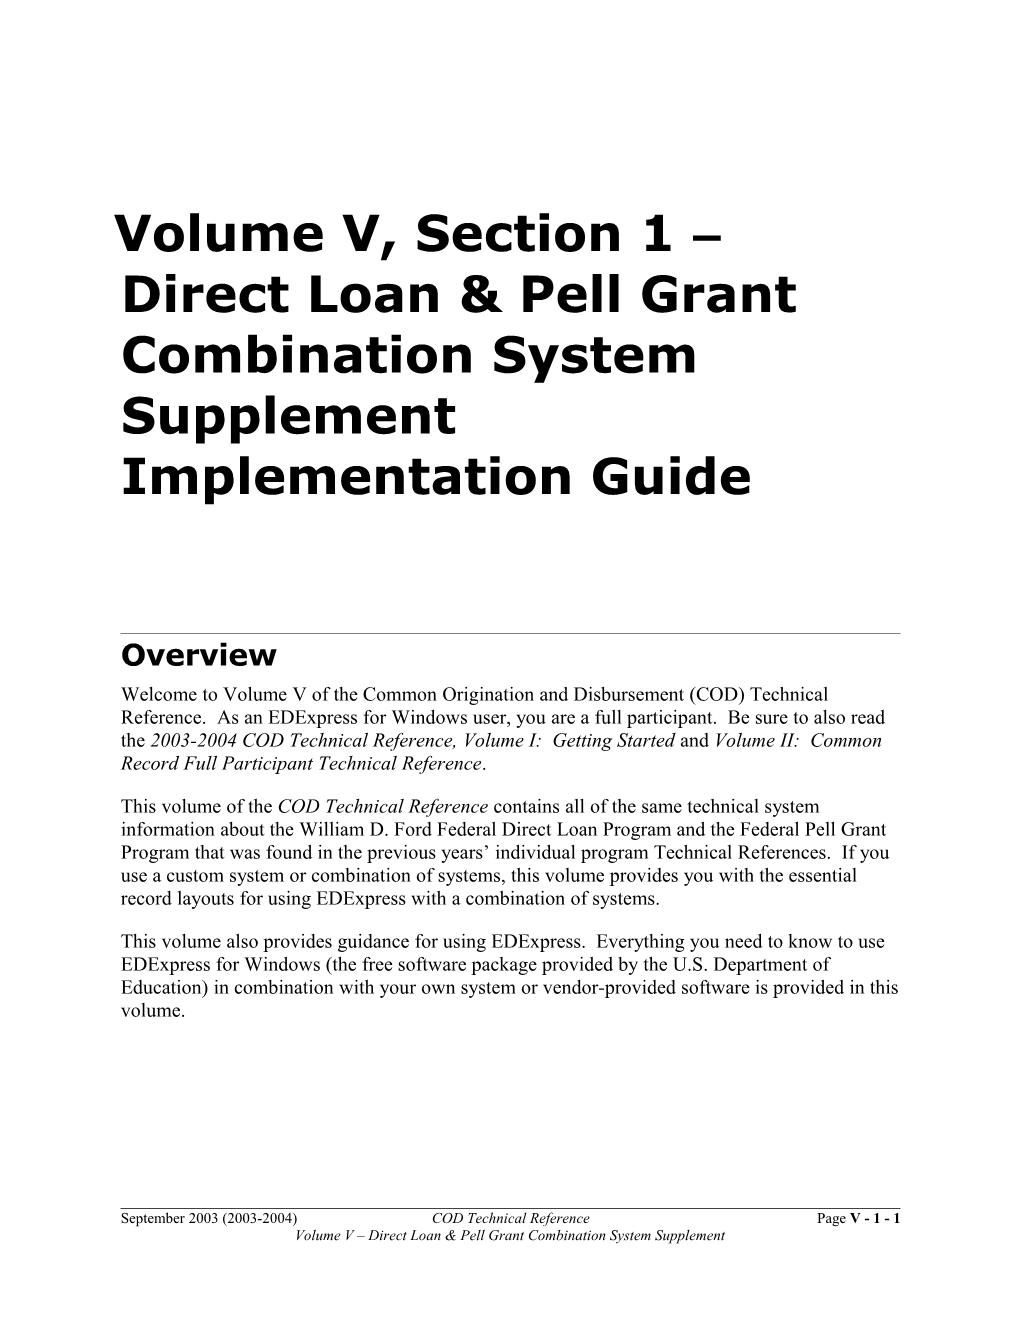 COD Tech Ref Vol. V Implementation Guide